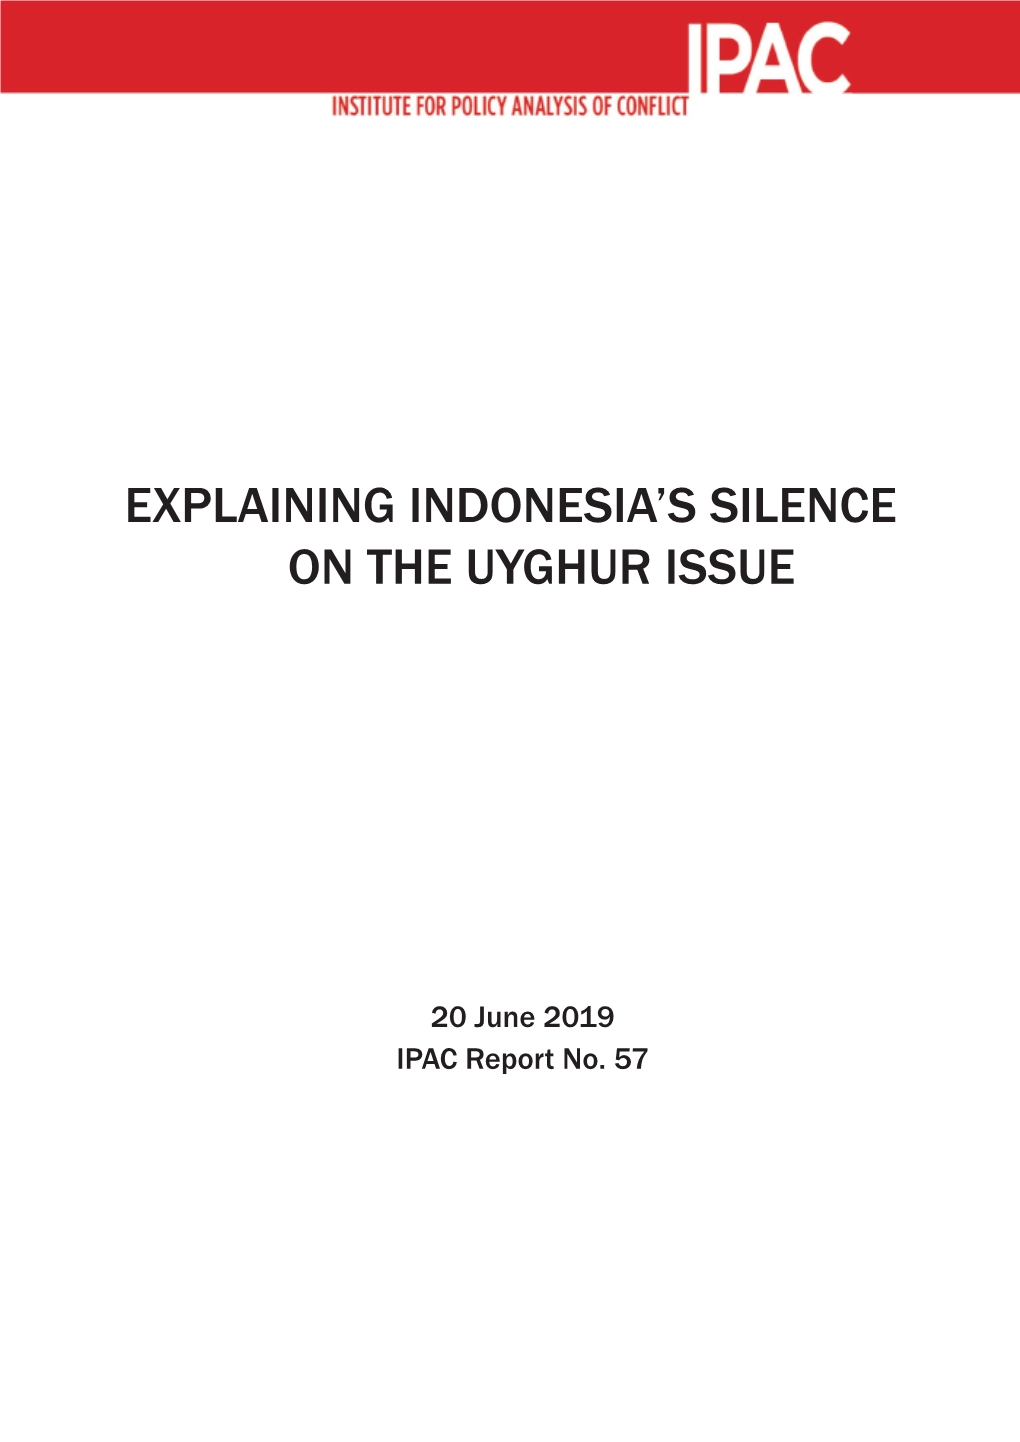 Explaining Indonesia's Silence on the Uyghur Issue